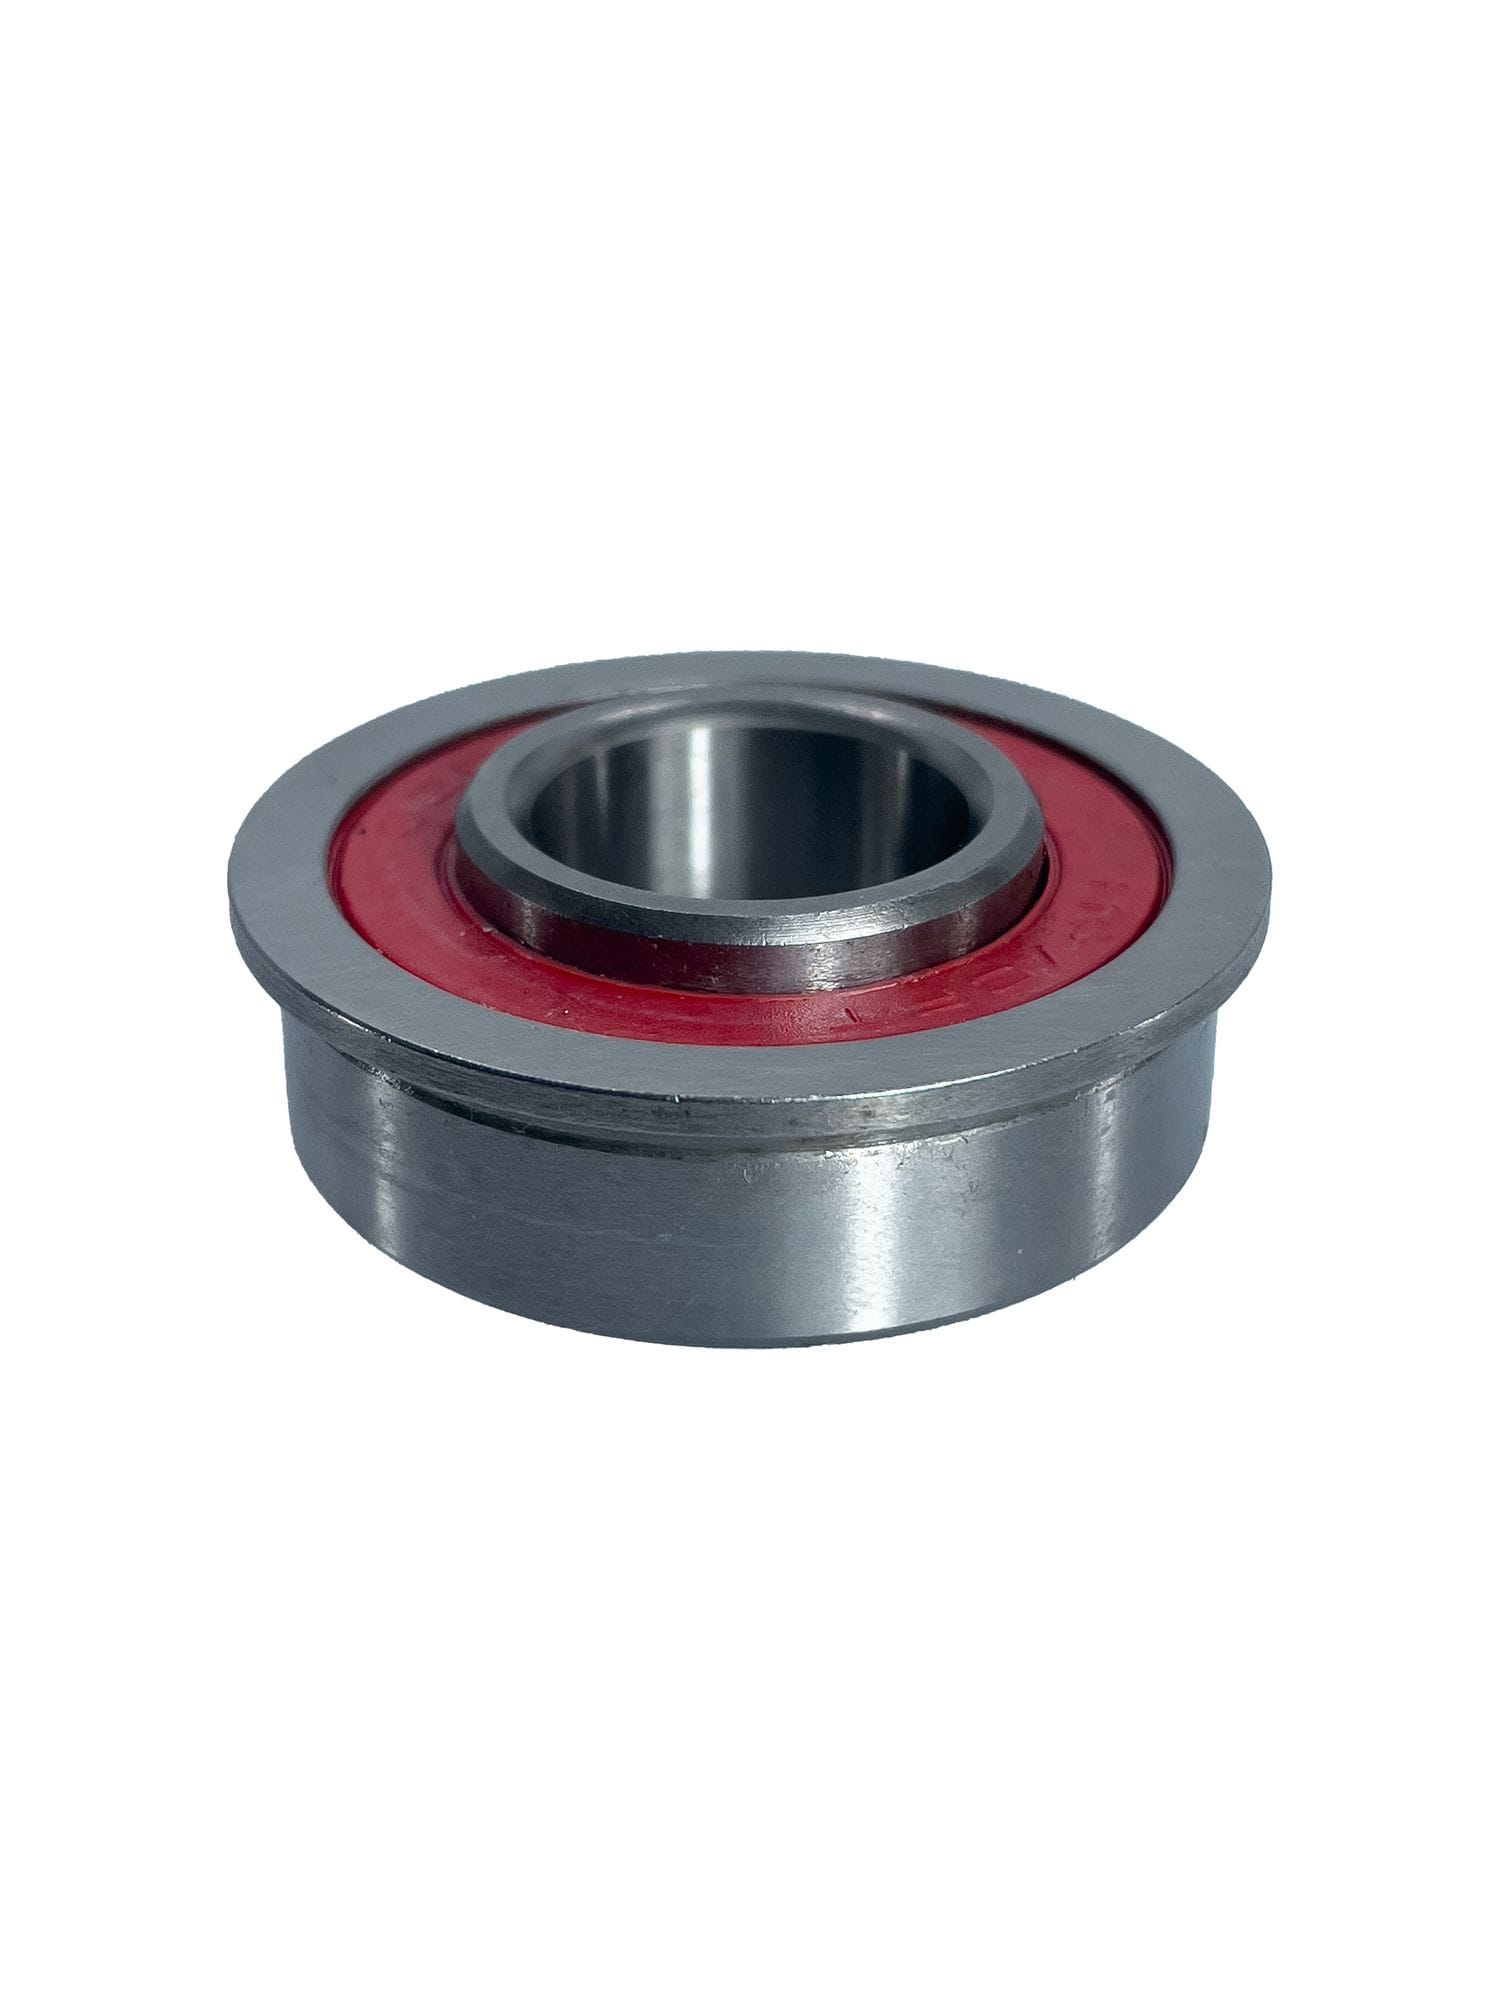 Bearing, M5/8, Premium semi-precision sealed ball bearing - red for Rotatruck rear wheels